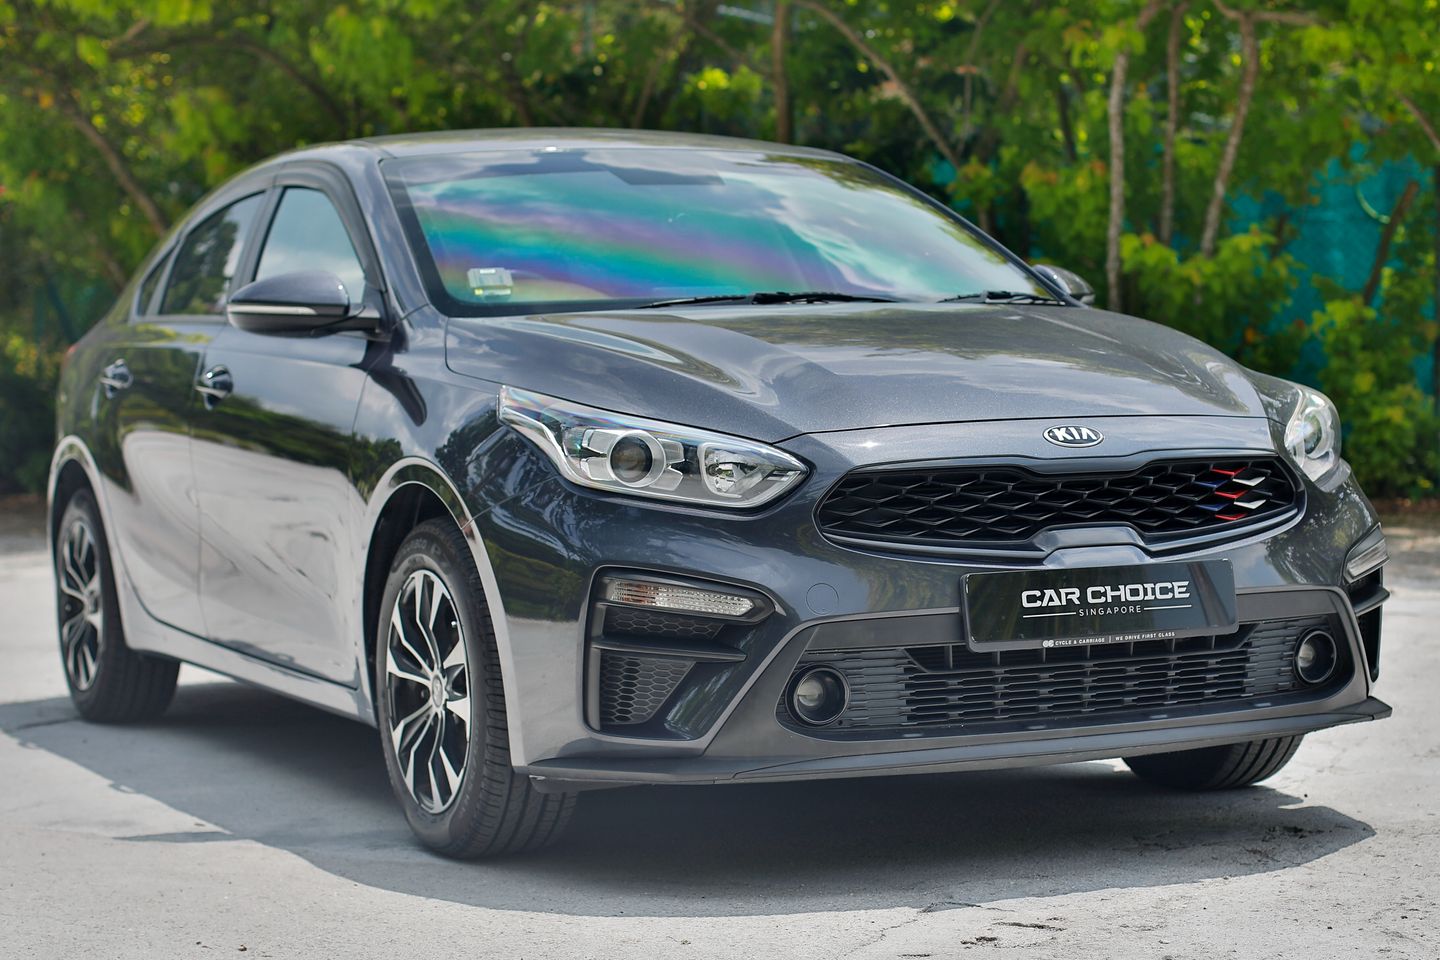 Certified Pre-Owned Kia Cerato 1.6 EX | Car Choice Singapore